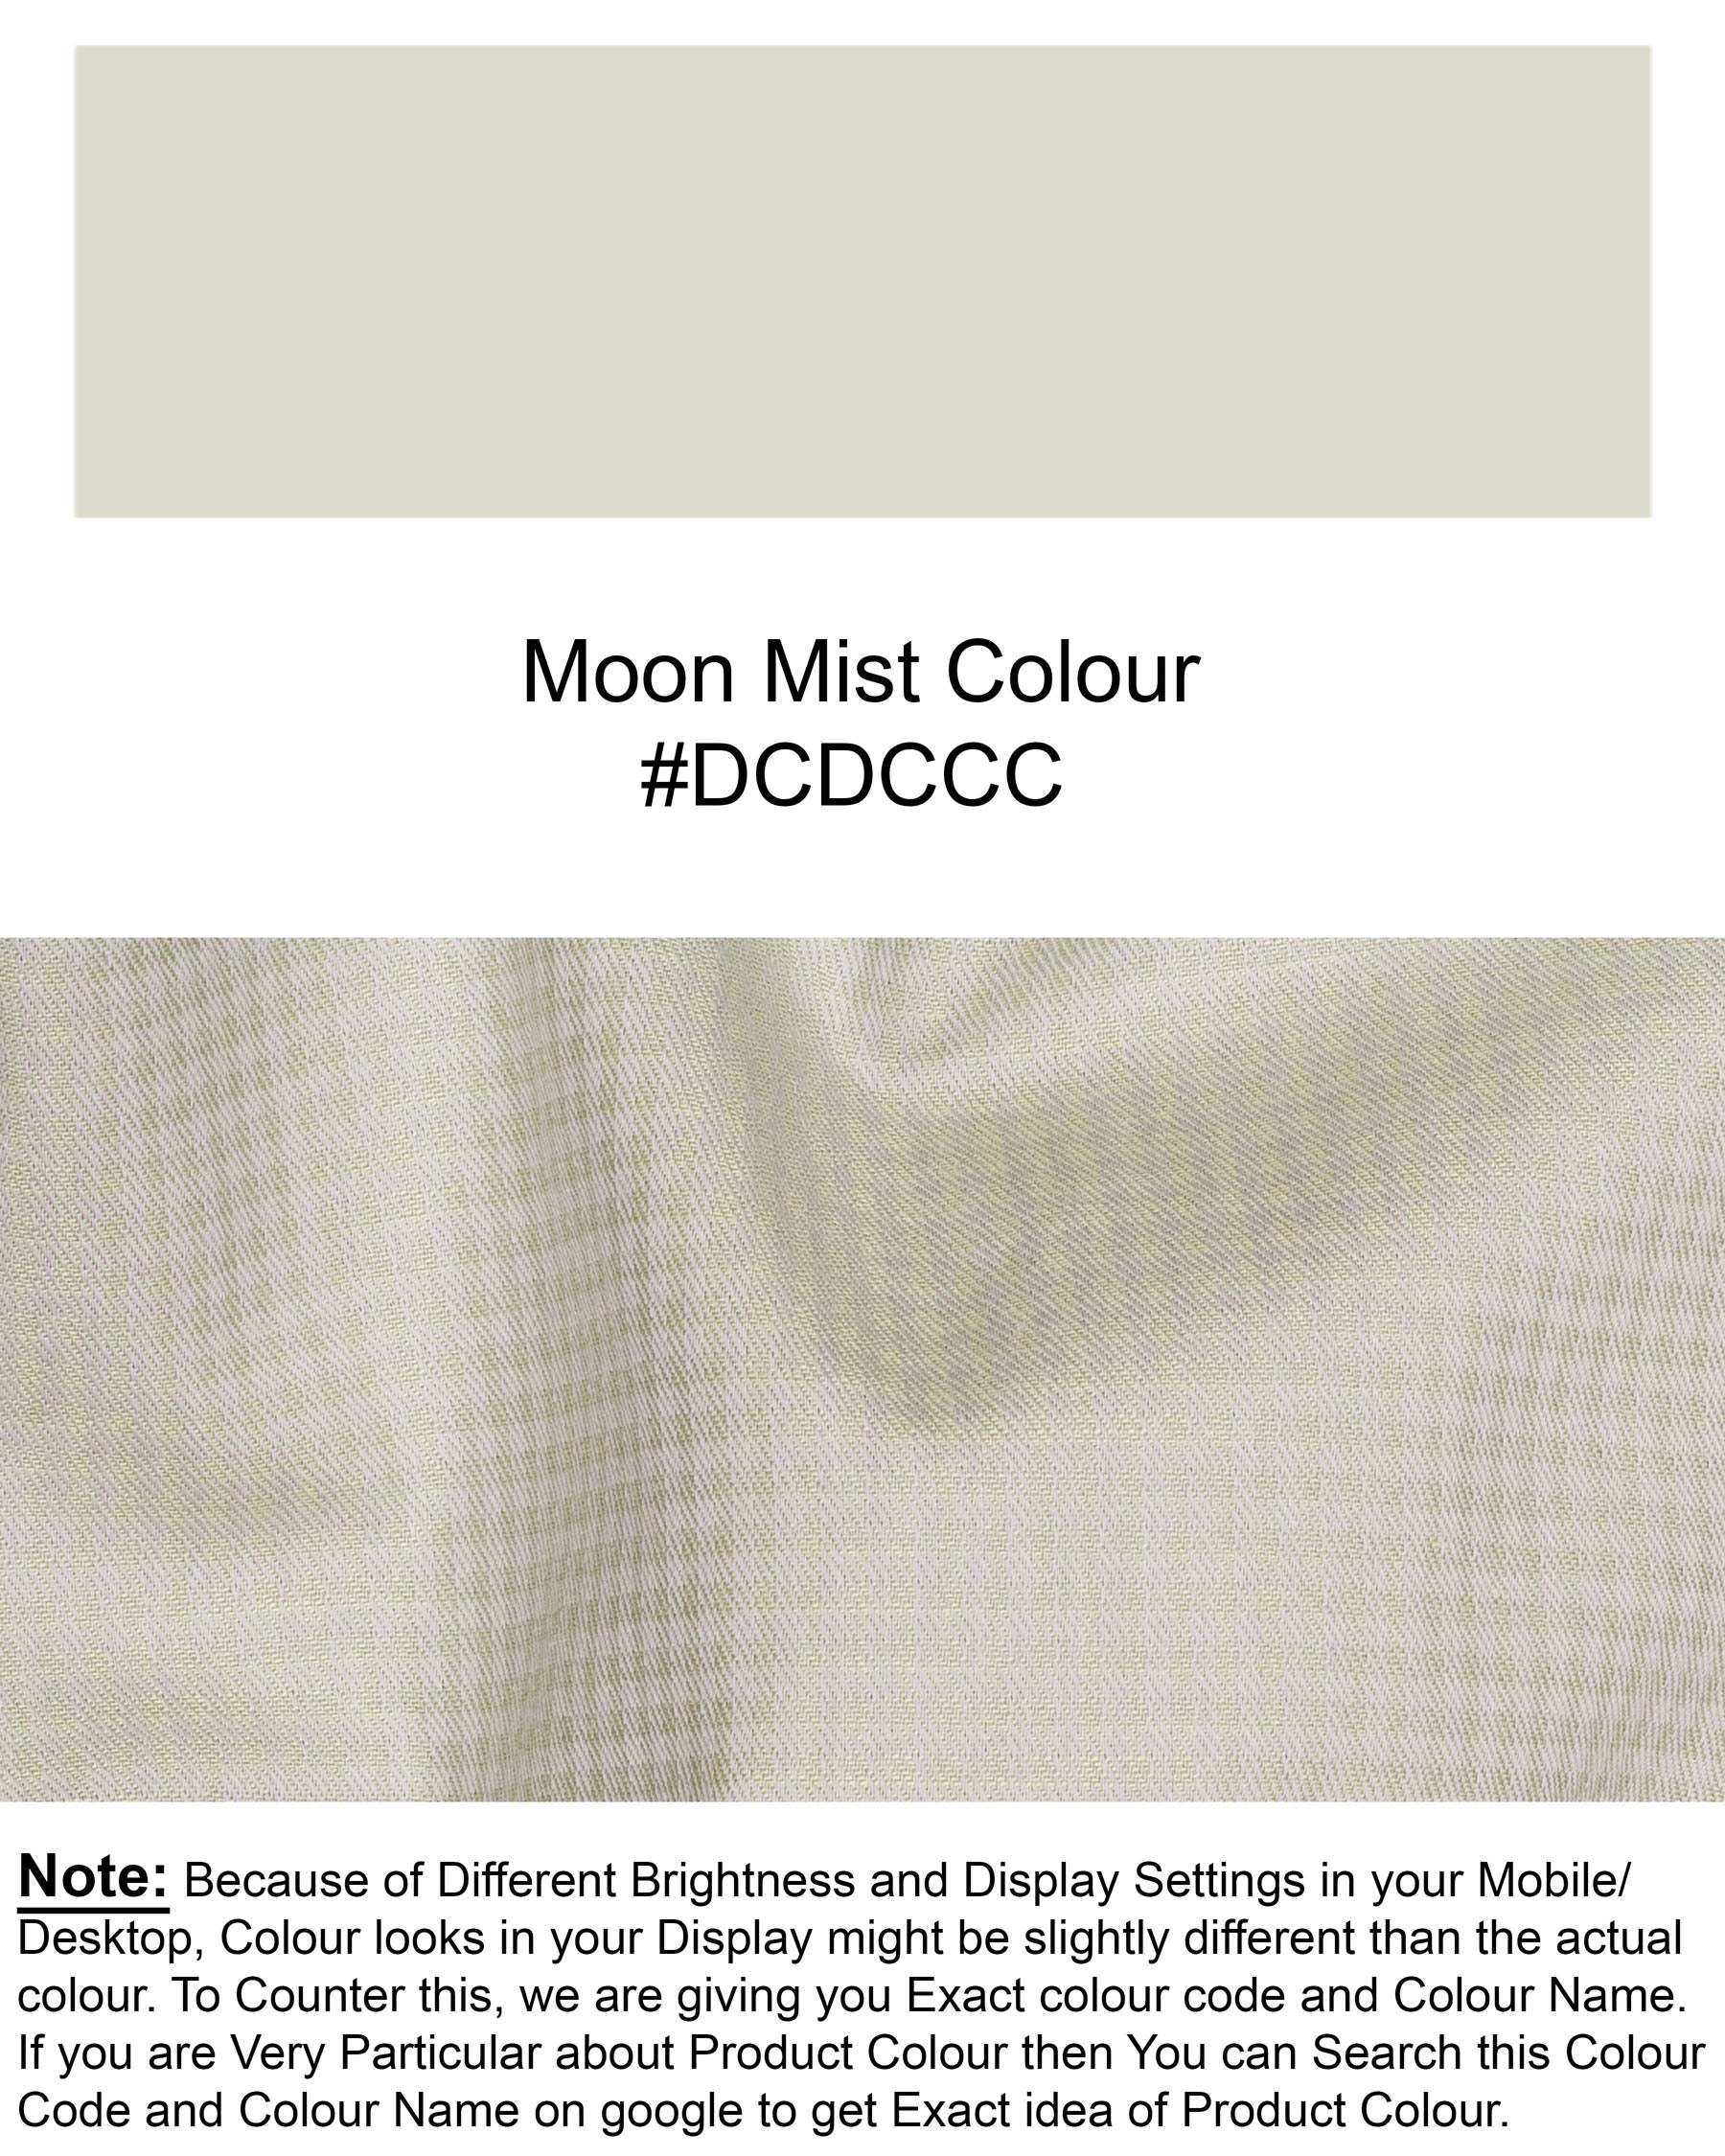 Moon Mist Dobby Textured Premium Giza Cotton Shirt 6802-38,6802-38,6802-39,6802-39,6802-40,6802-40,6802-42,6802-42,6802-44,6802-44,6802-46,6802-46,6802-48,6802-48,6802-50,6802-50,6802-52,6802-52